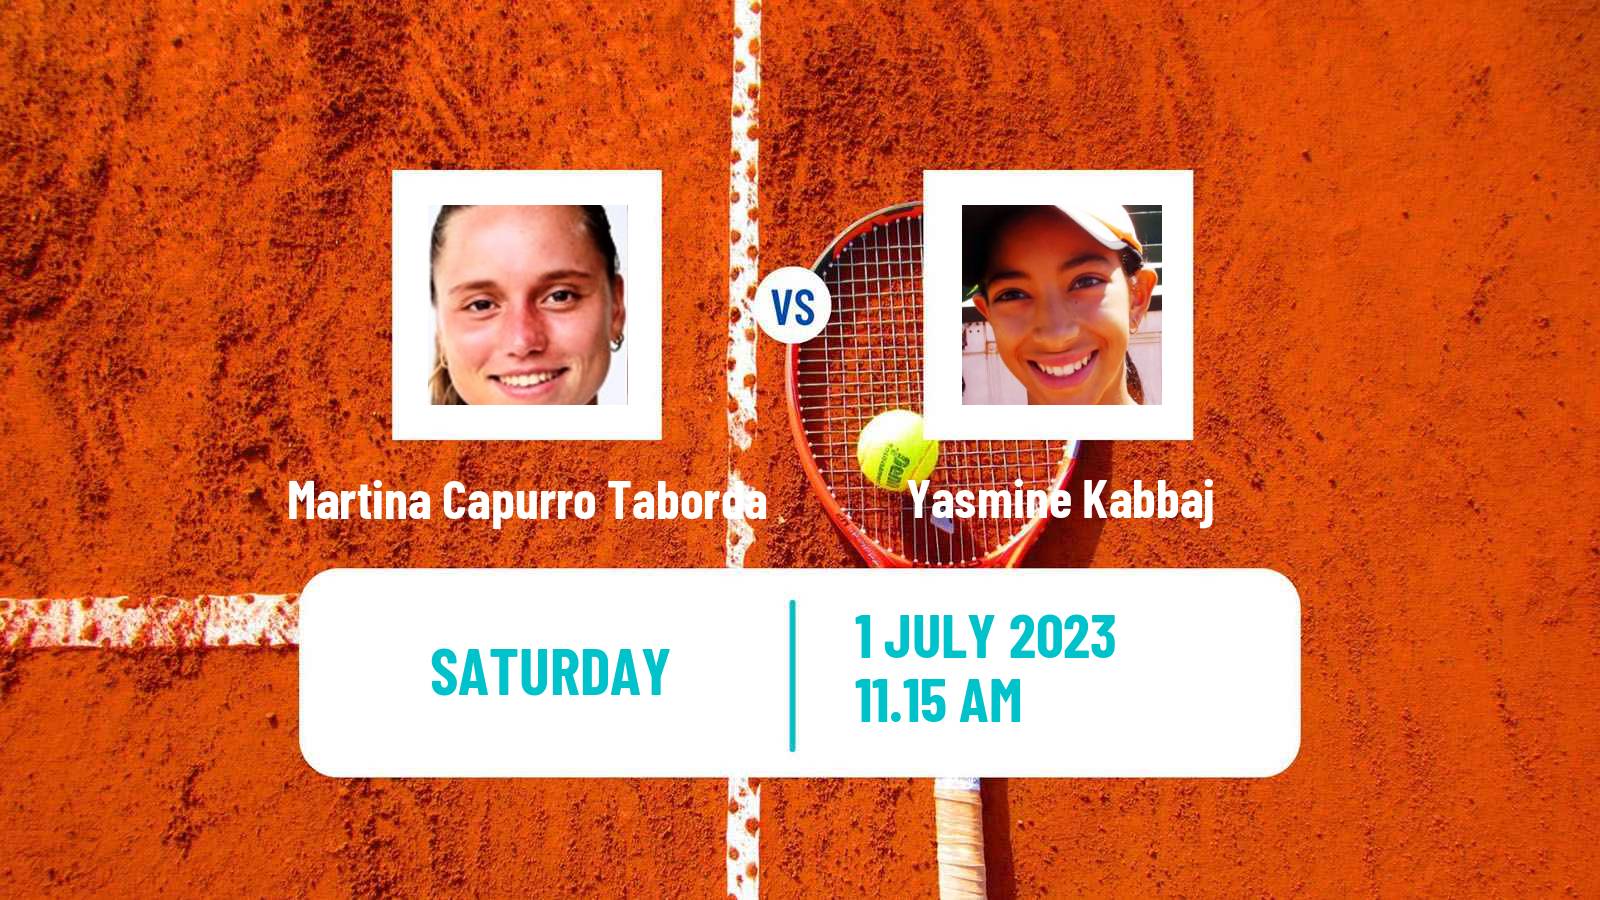 Tennis ITF W25 Santo Domingo 4 Women Martina Capurro Taborda - Yasmine Kabbaj